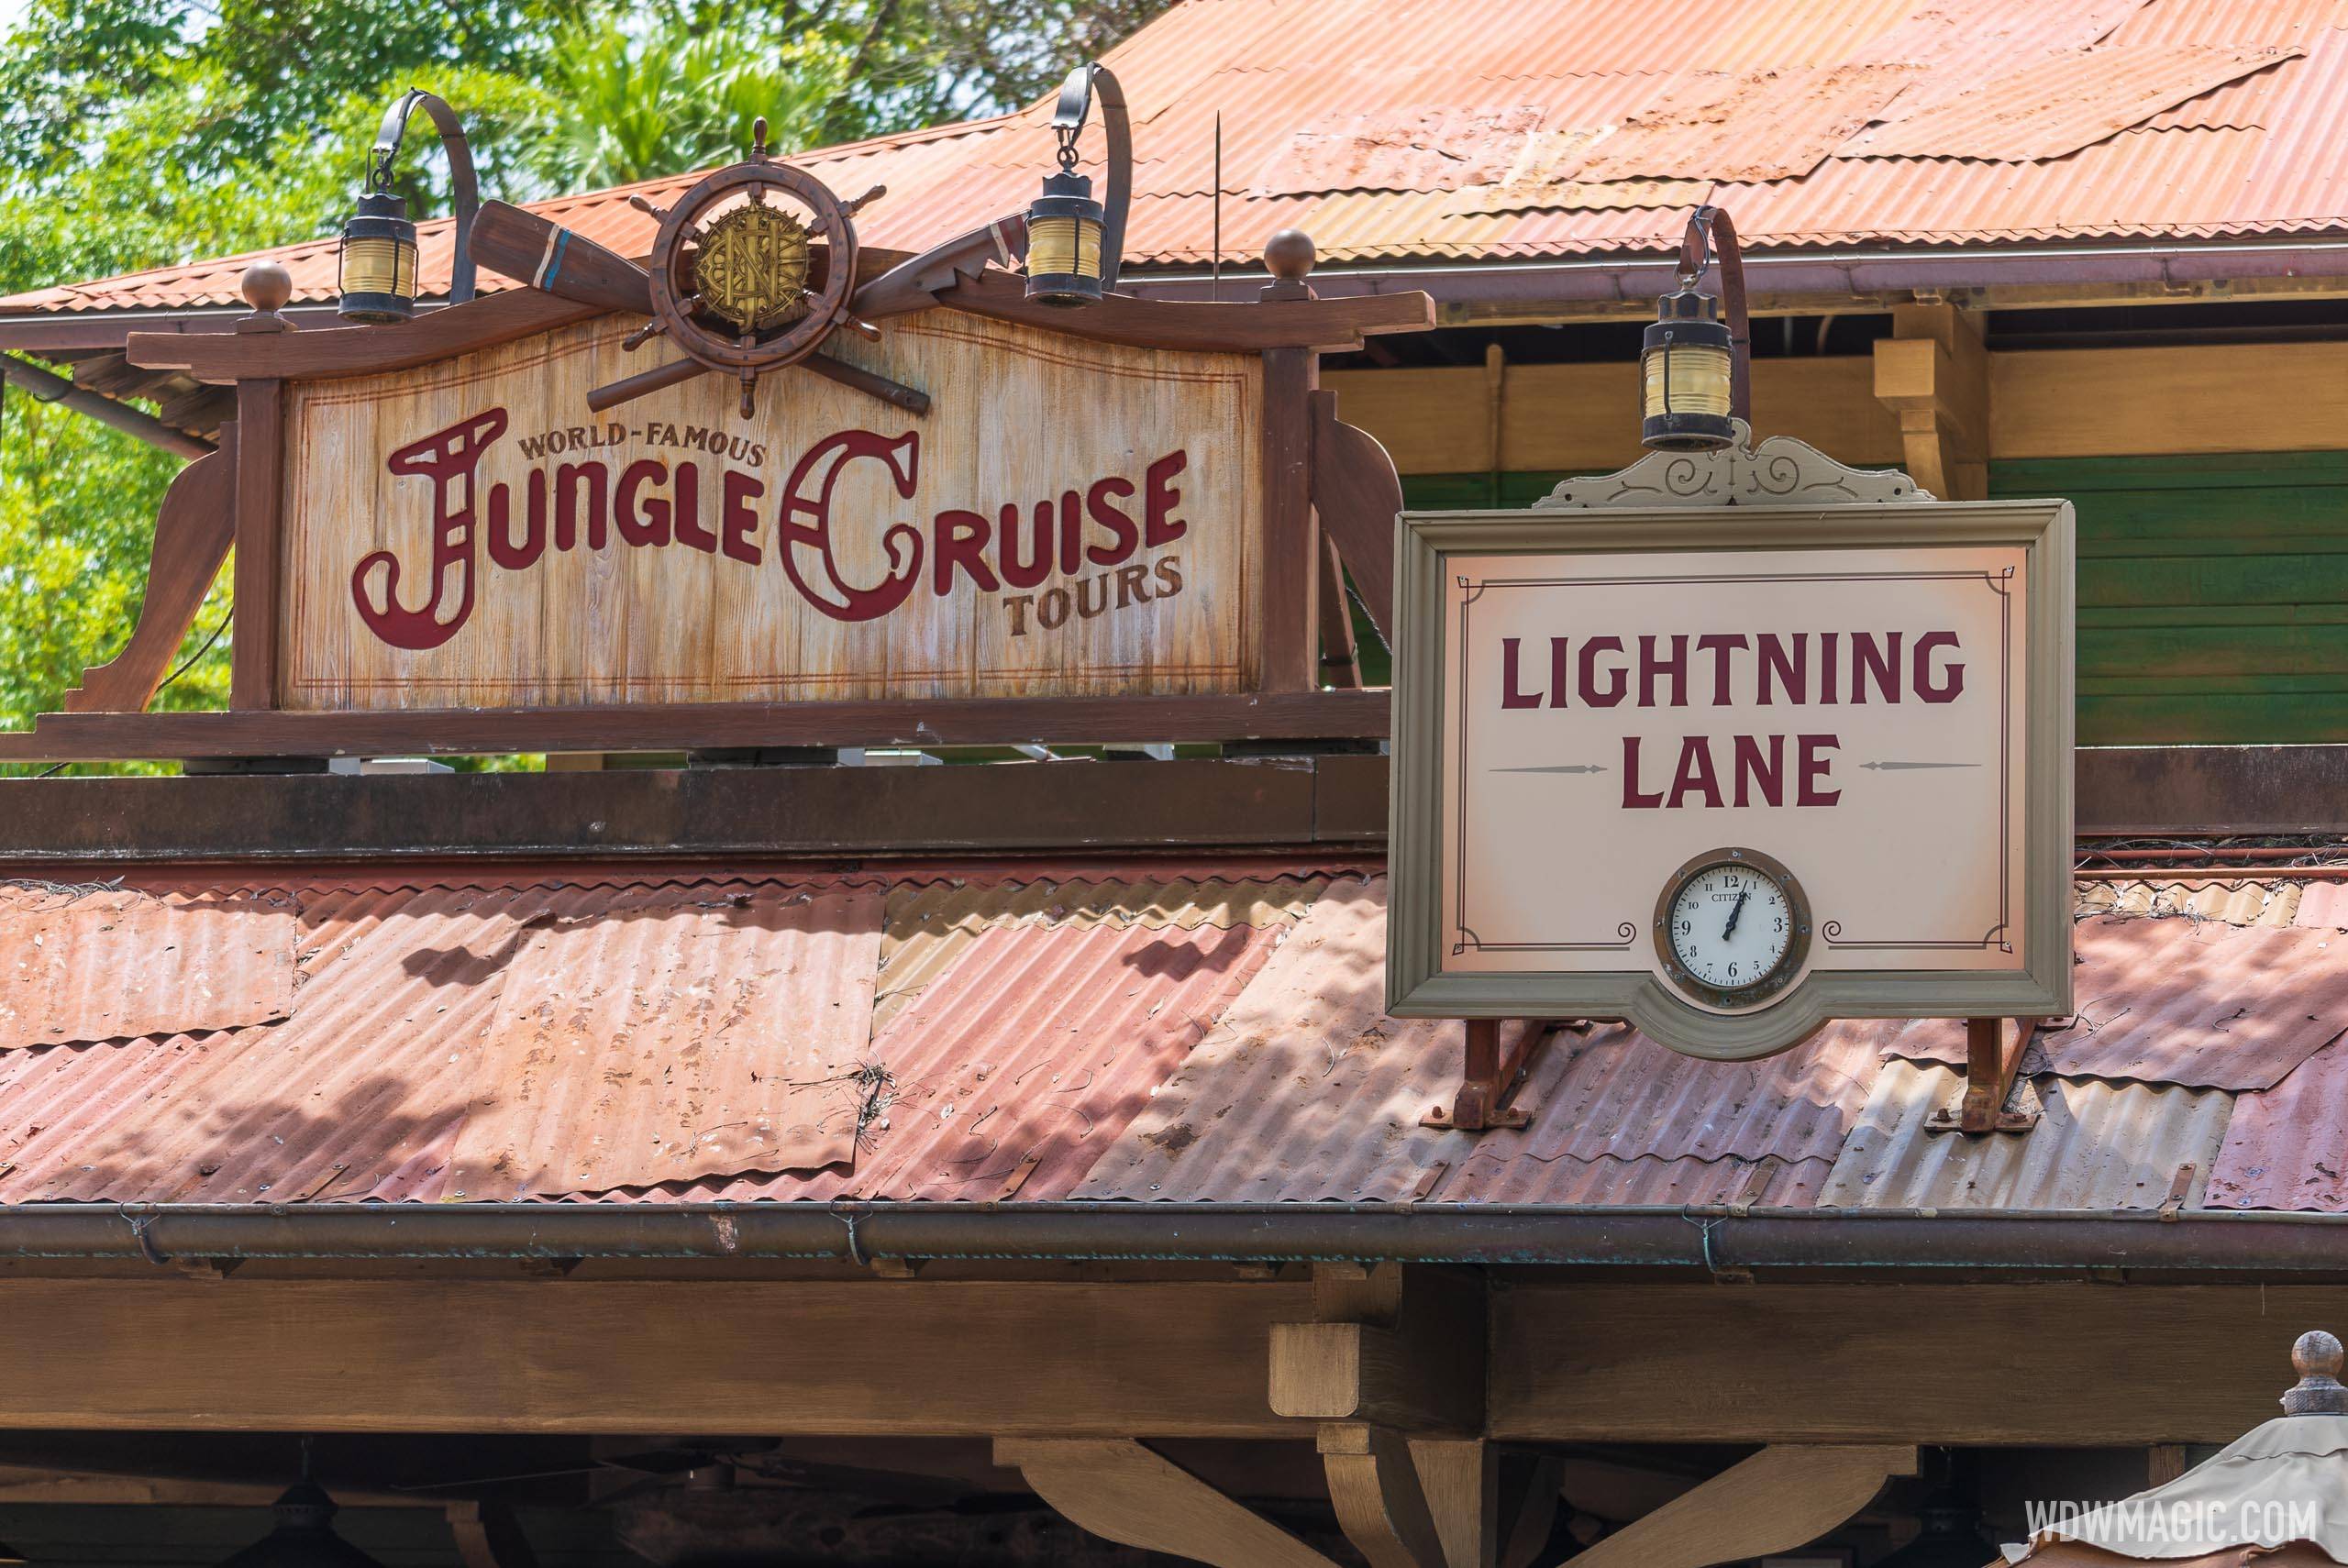 Lightning Lane access via Genie+ will cost $29 per per person today at Walt Disney World